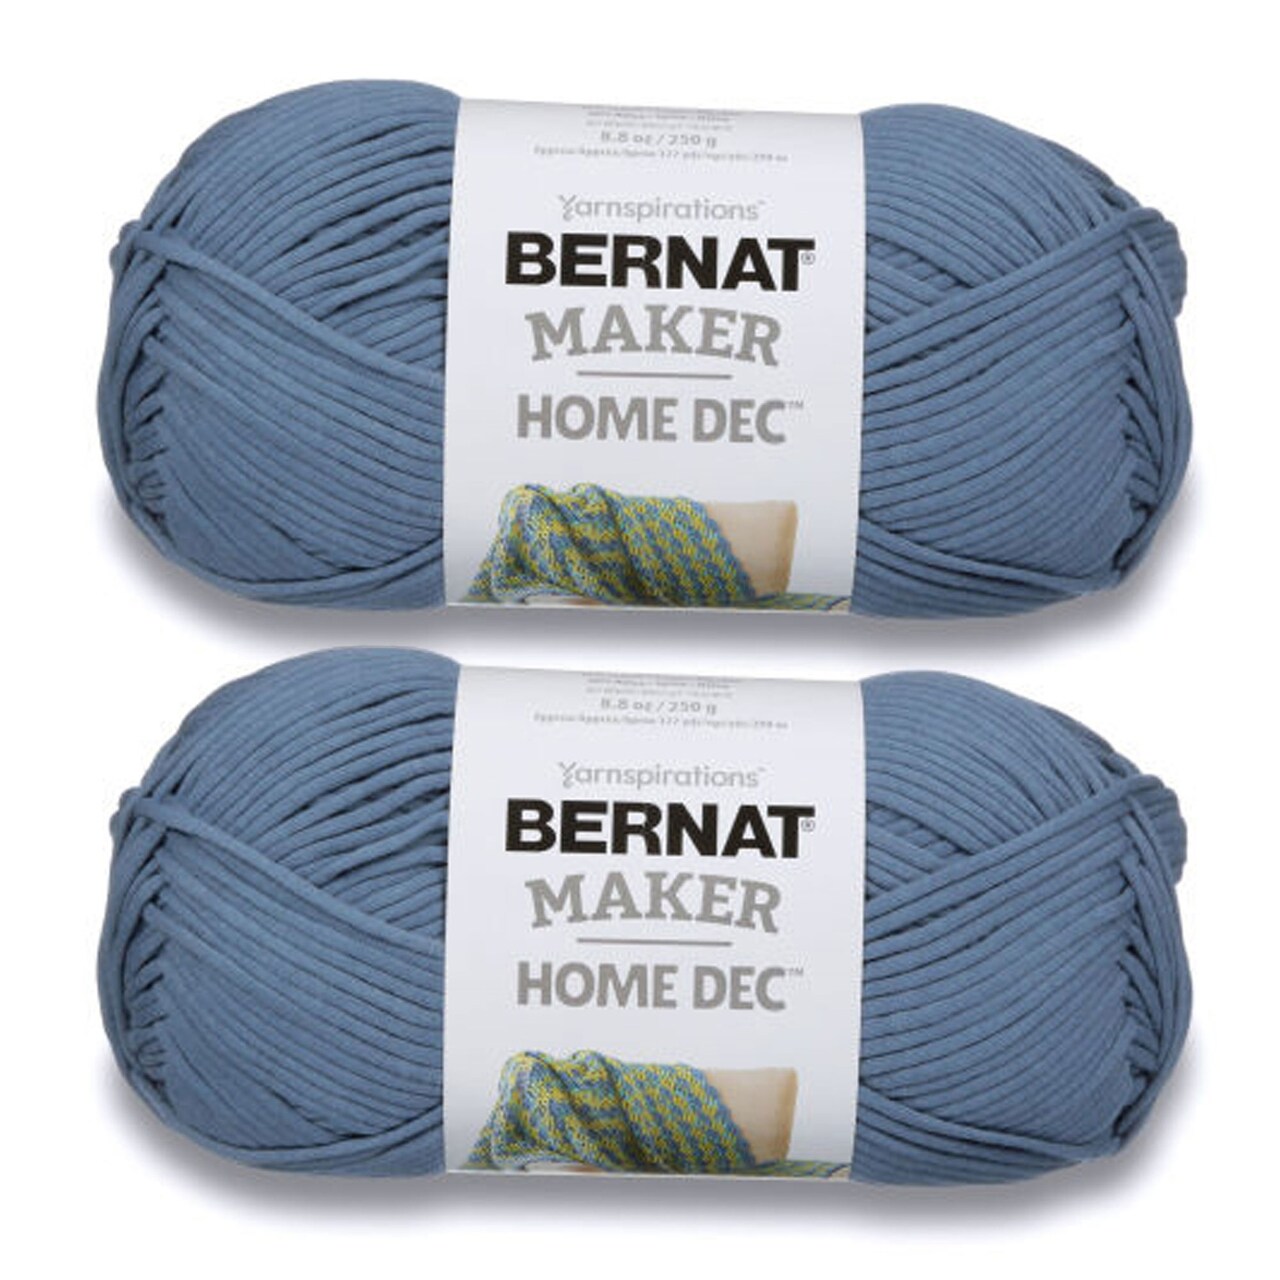 Bernat Maker Home Dec Steel Blue Yarn - 2 Pack of 250g/8.8oz